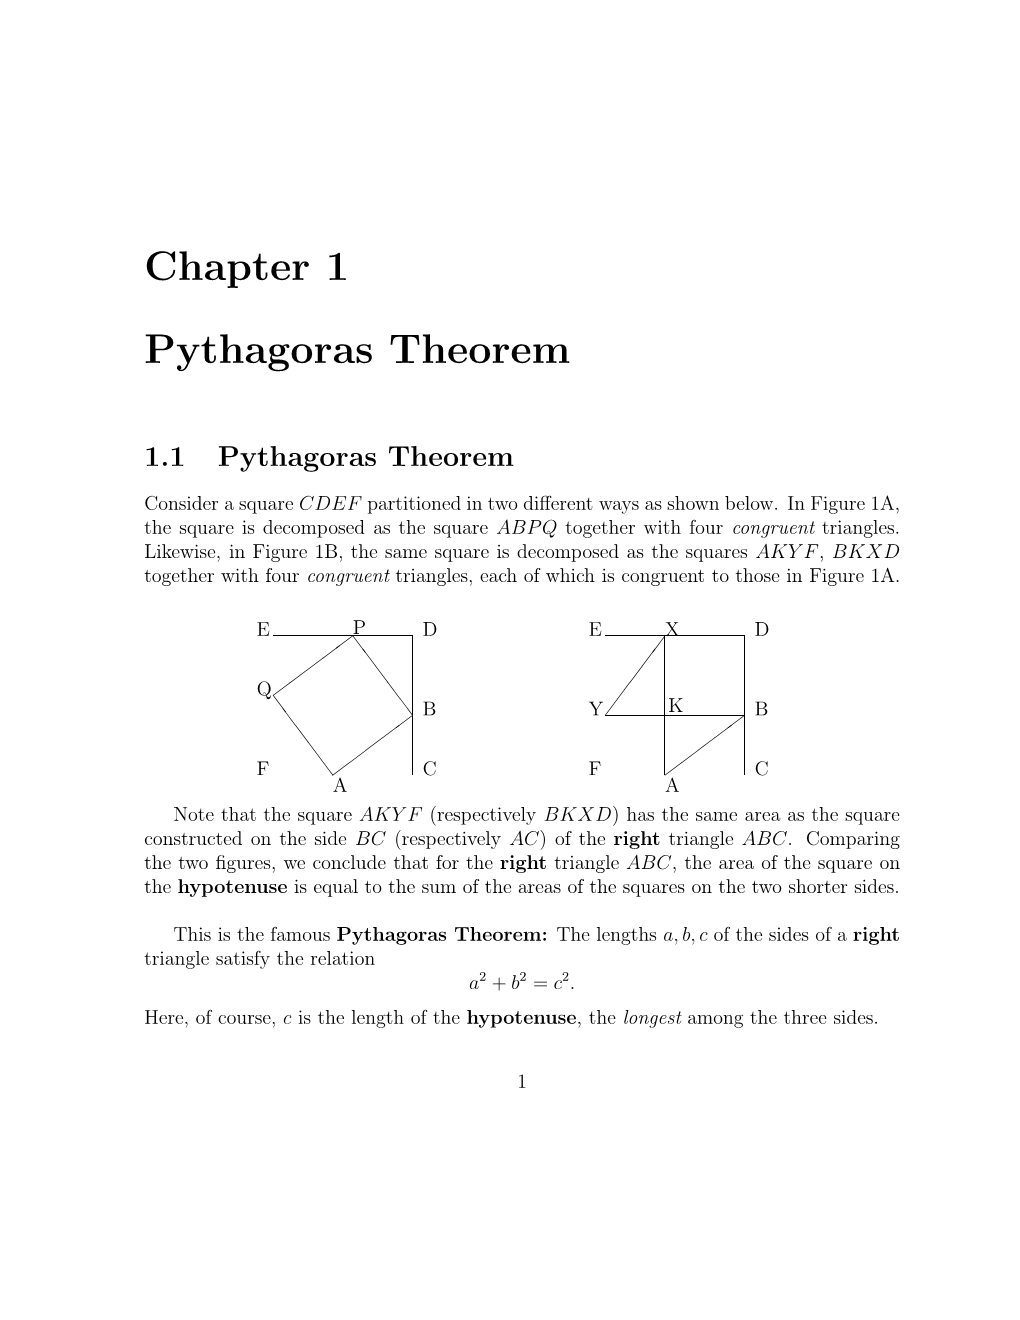 Chapter 1 Pythagoras Theorem